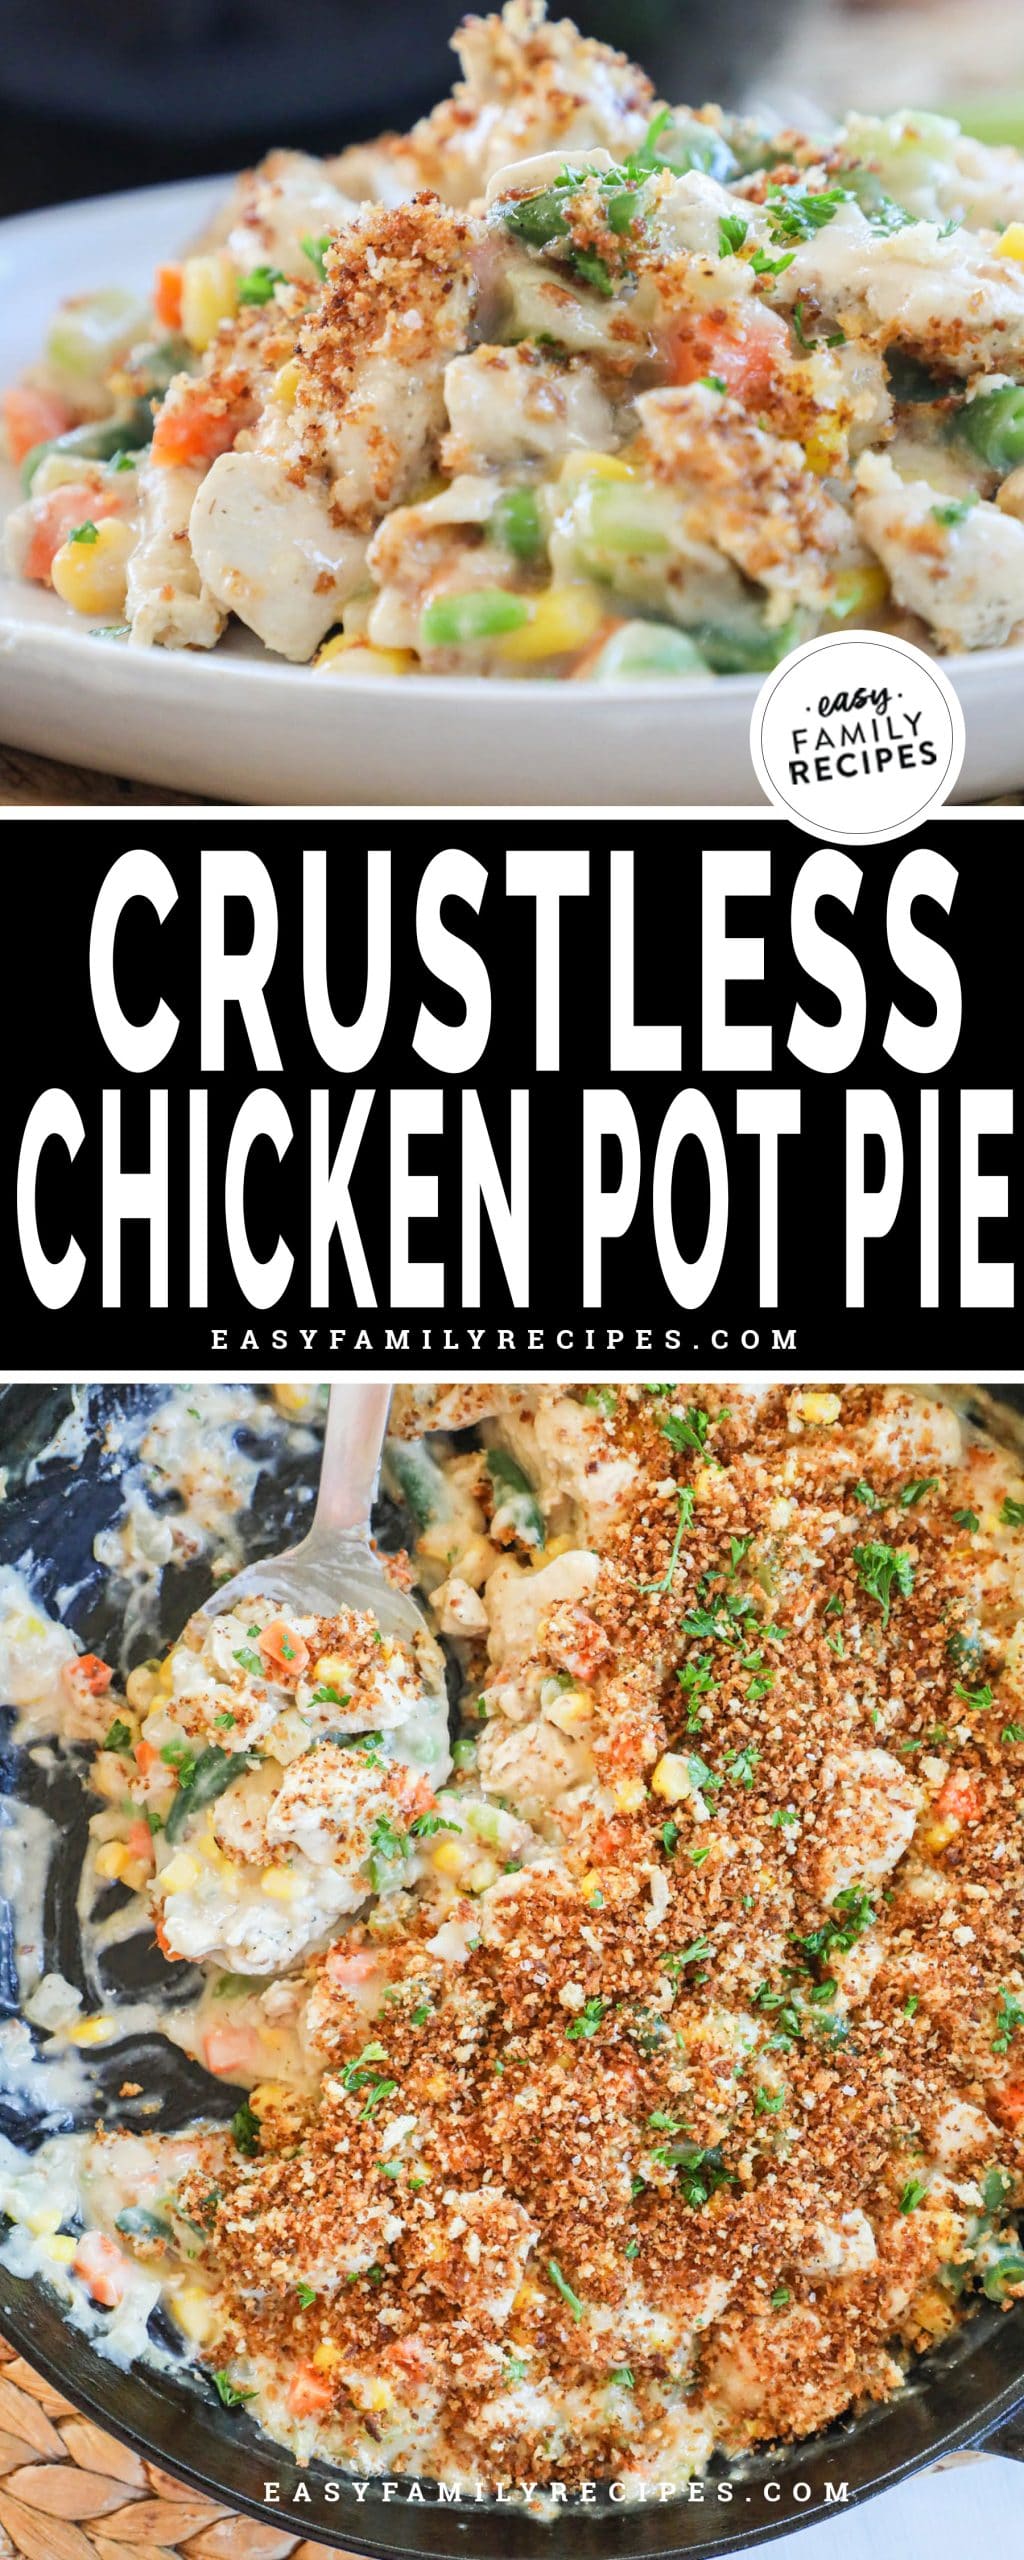 Crustless Chicken Pot Pie served on a plate